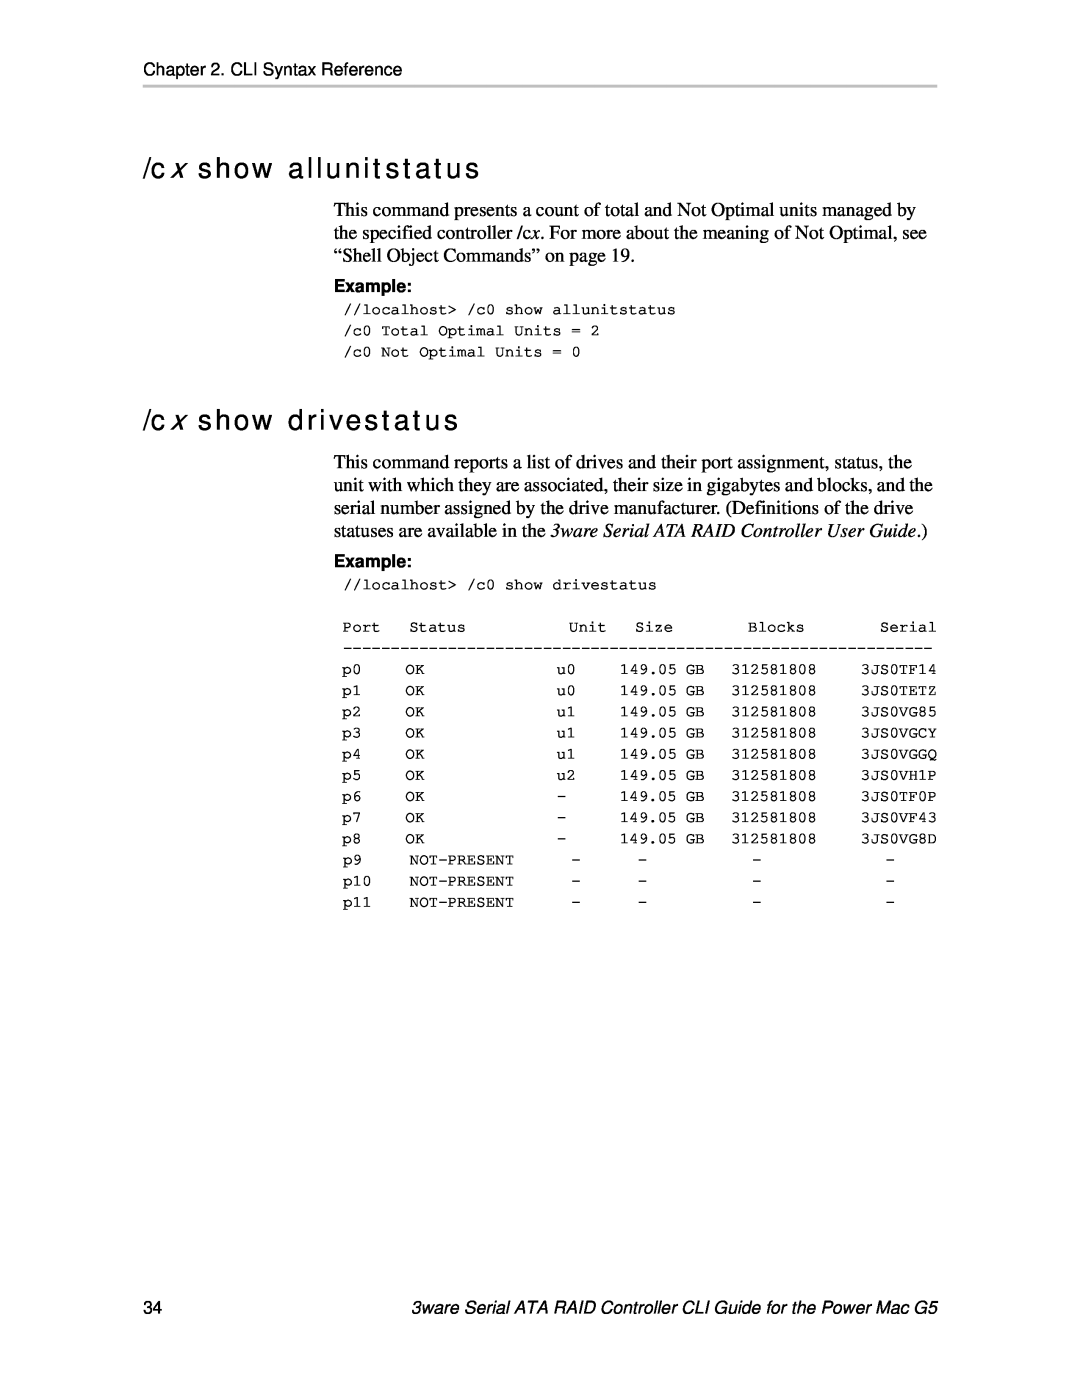 AMCC 9590SE-4ME manual cx show allunitstatus, cx show drivestatus, CLI Syntax Reference, Example 